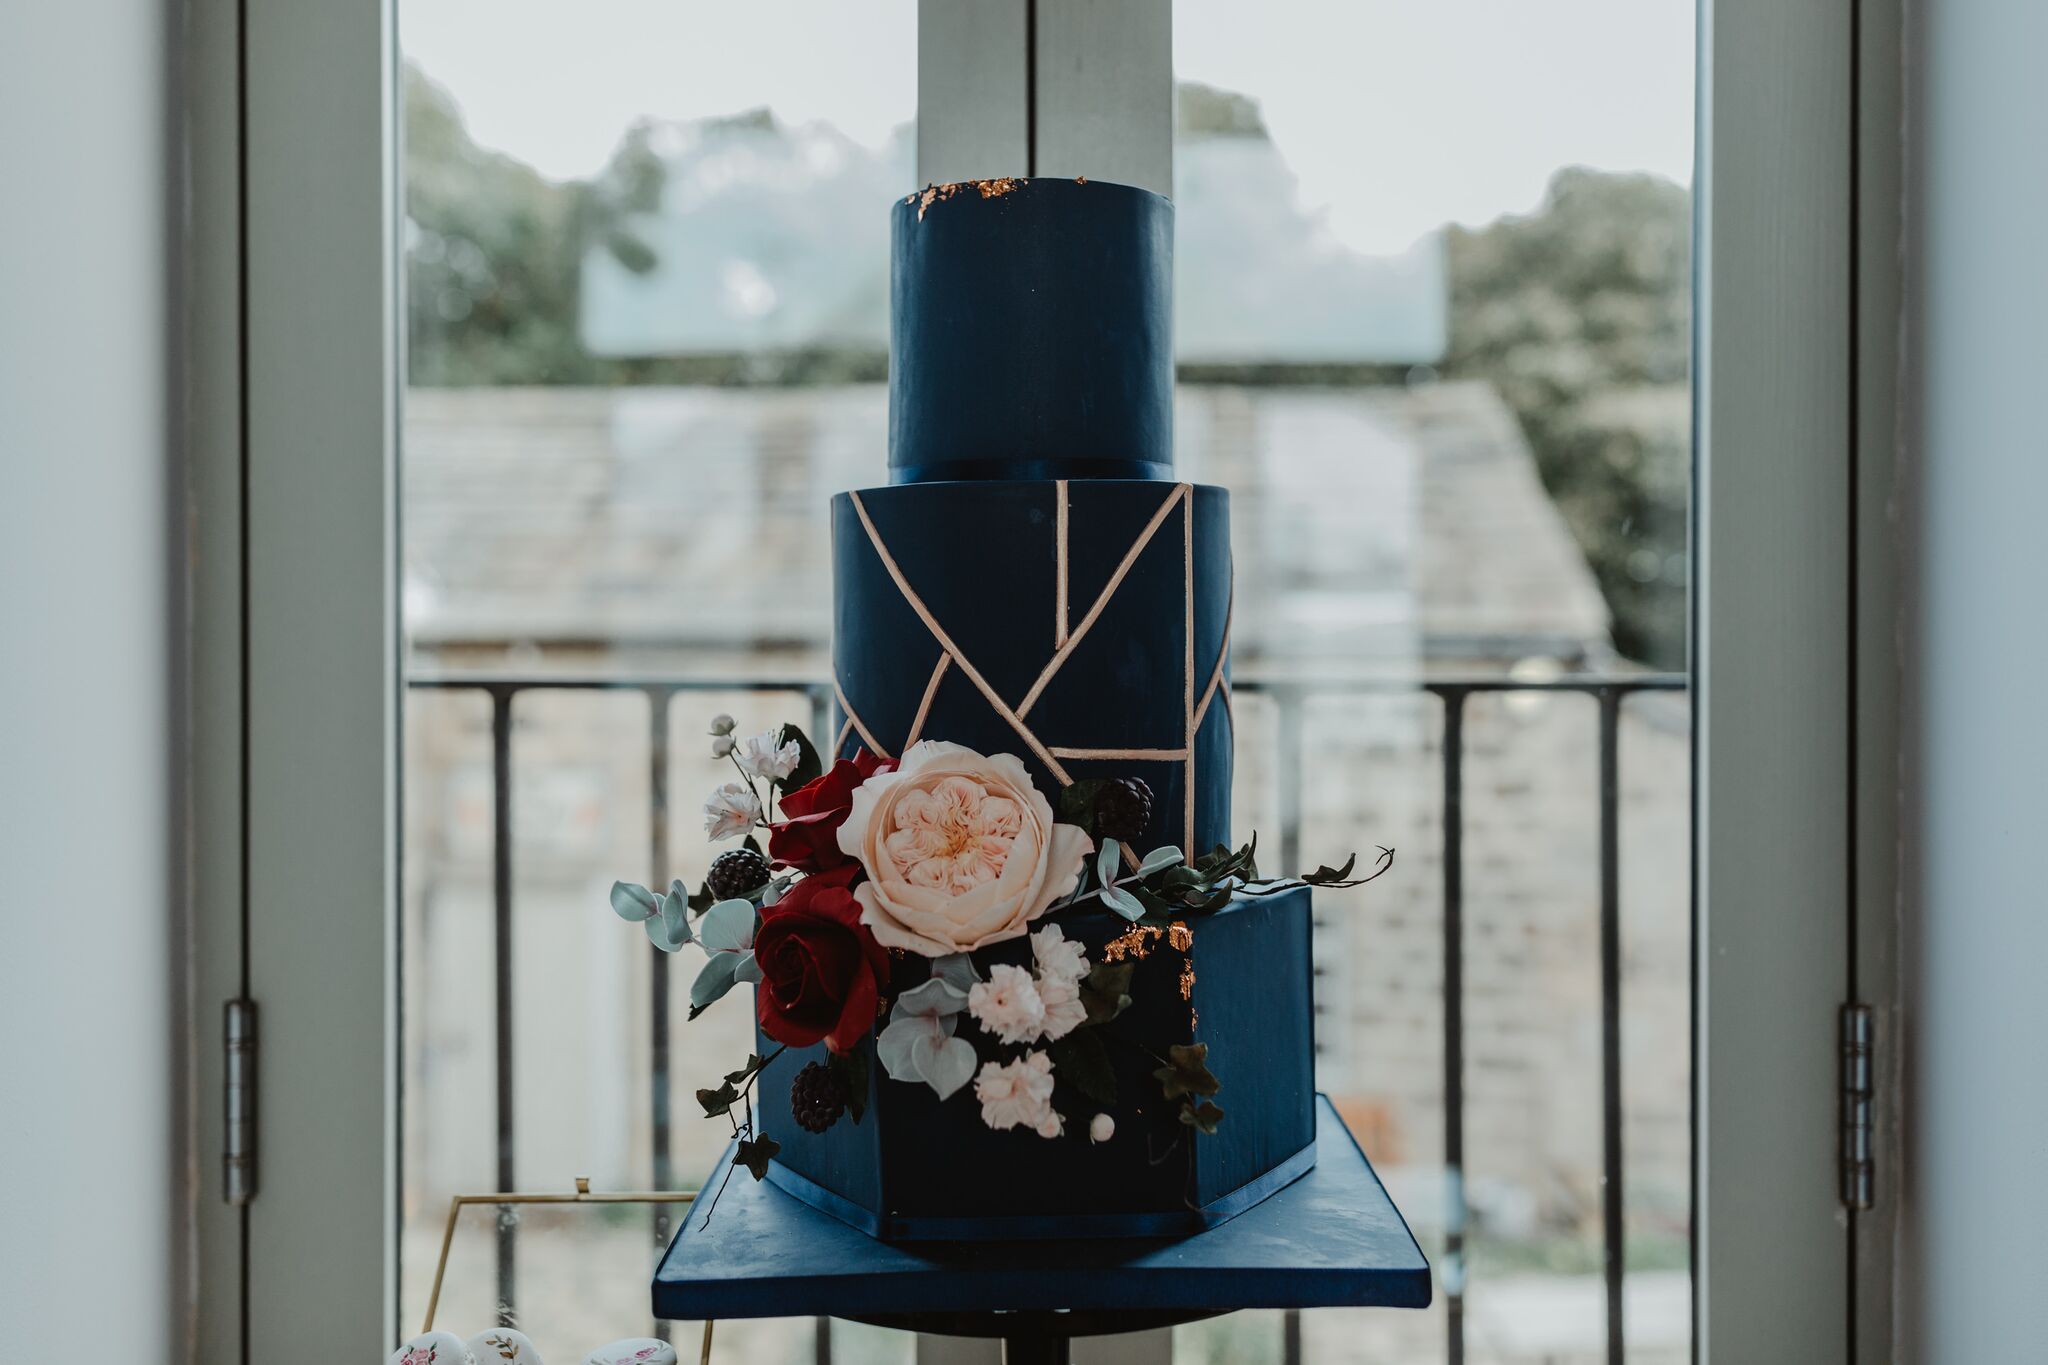 Where the Ribbon Ends - Alternative wedding cake - Creative wedding cake - quirky wedding cake -1